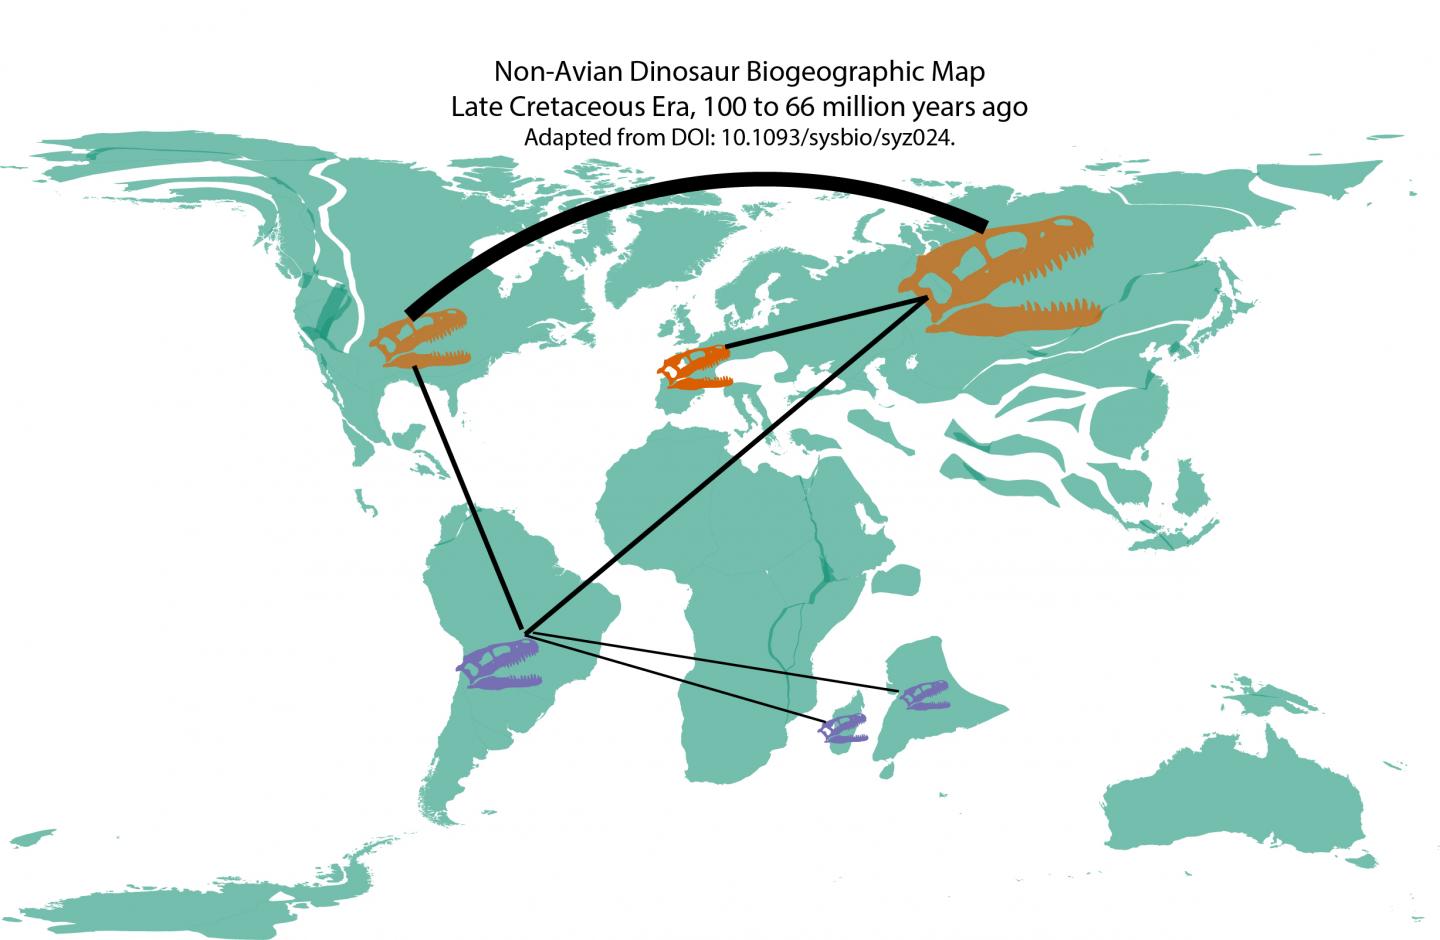 Late Cretaceous Biogeographical Map of Nonavian Dinosaurs